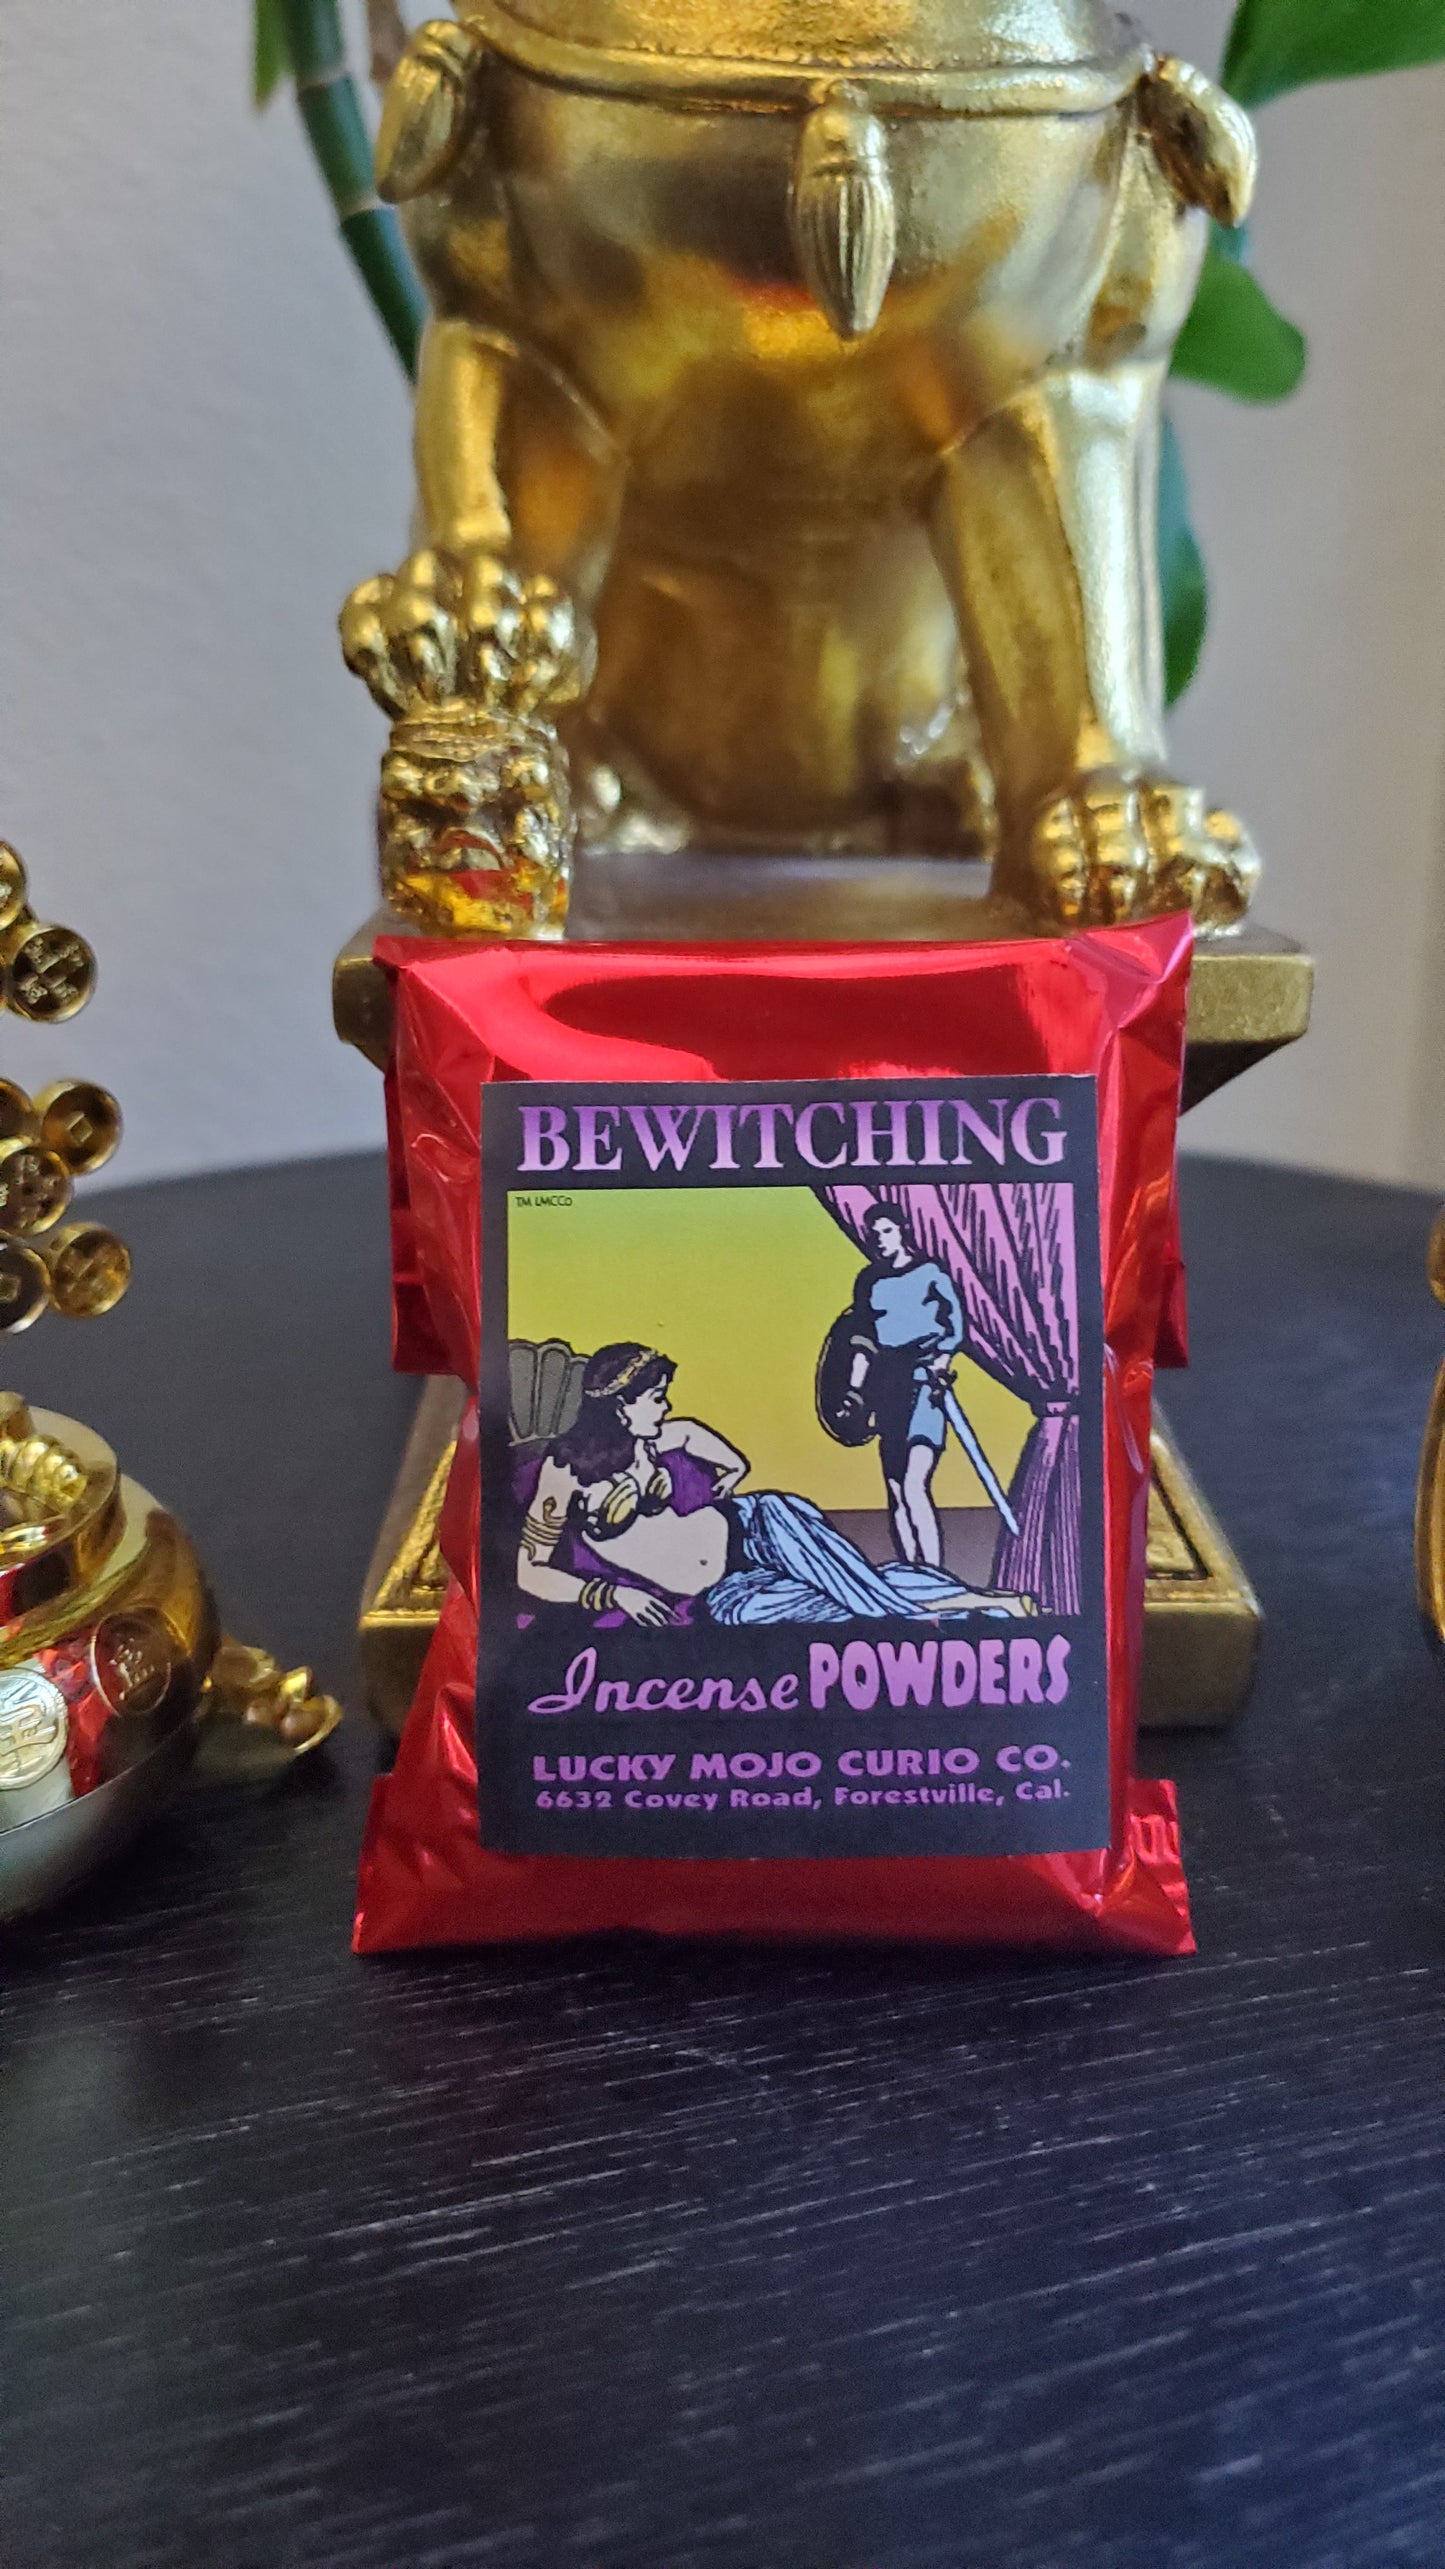 LuckyMojoCurioCo "Bewitching" Incense Powder #Great Deal #LuckyMojoCurioCo #LuckyMojo #IncensePowder